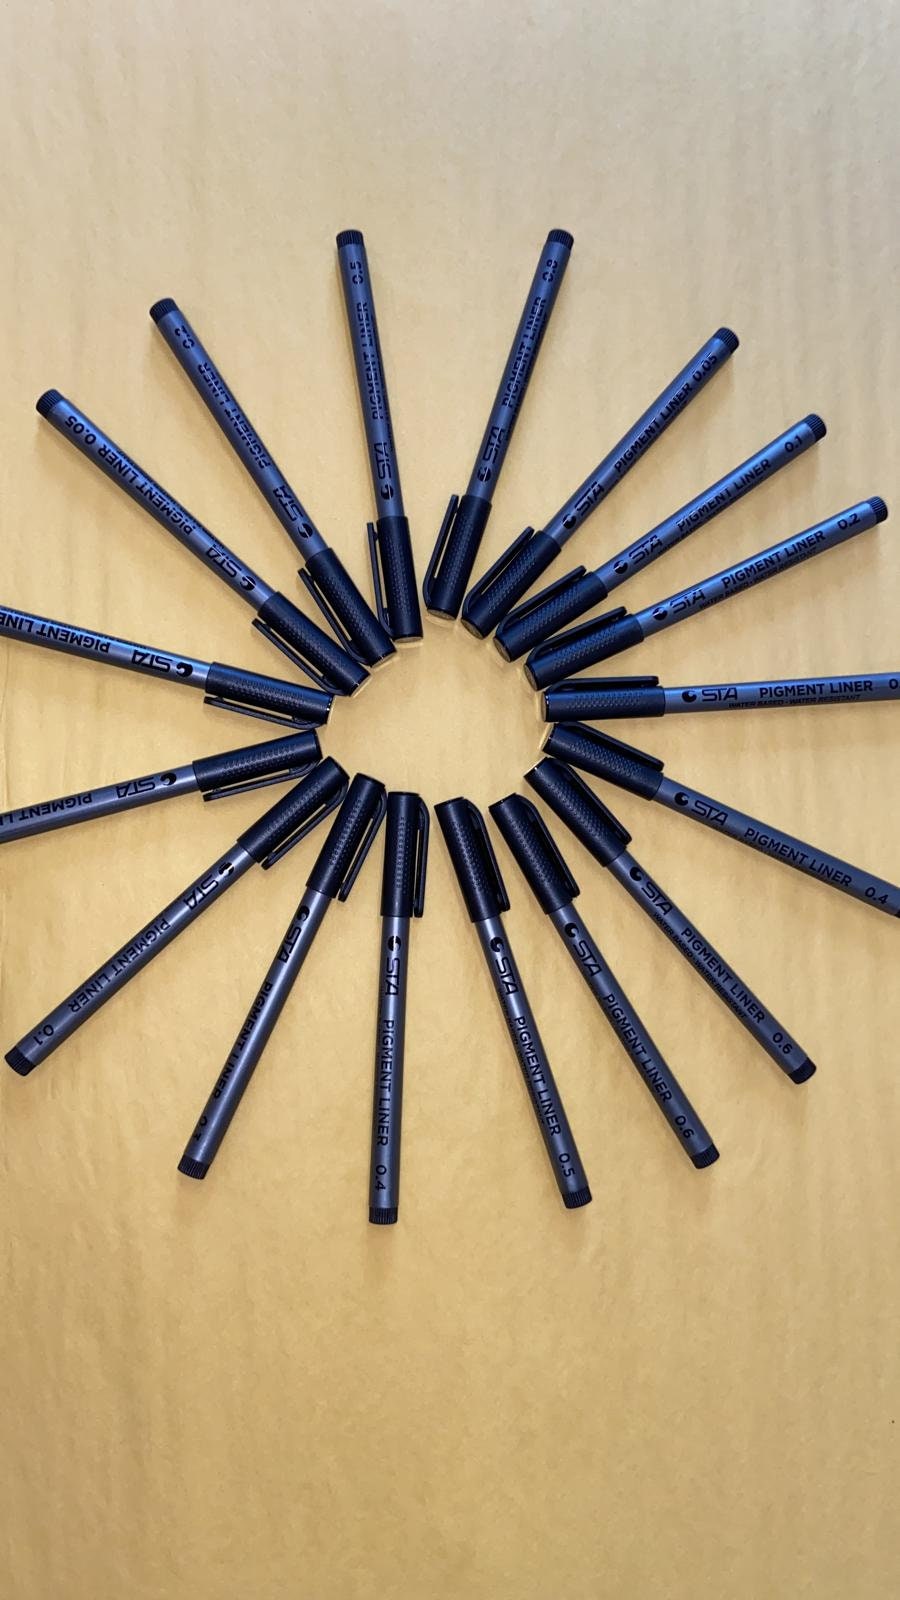 Black Fineliner Pens, Surcotto Set of 9 Fine Liners Pigment Liner